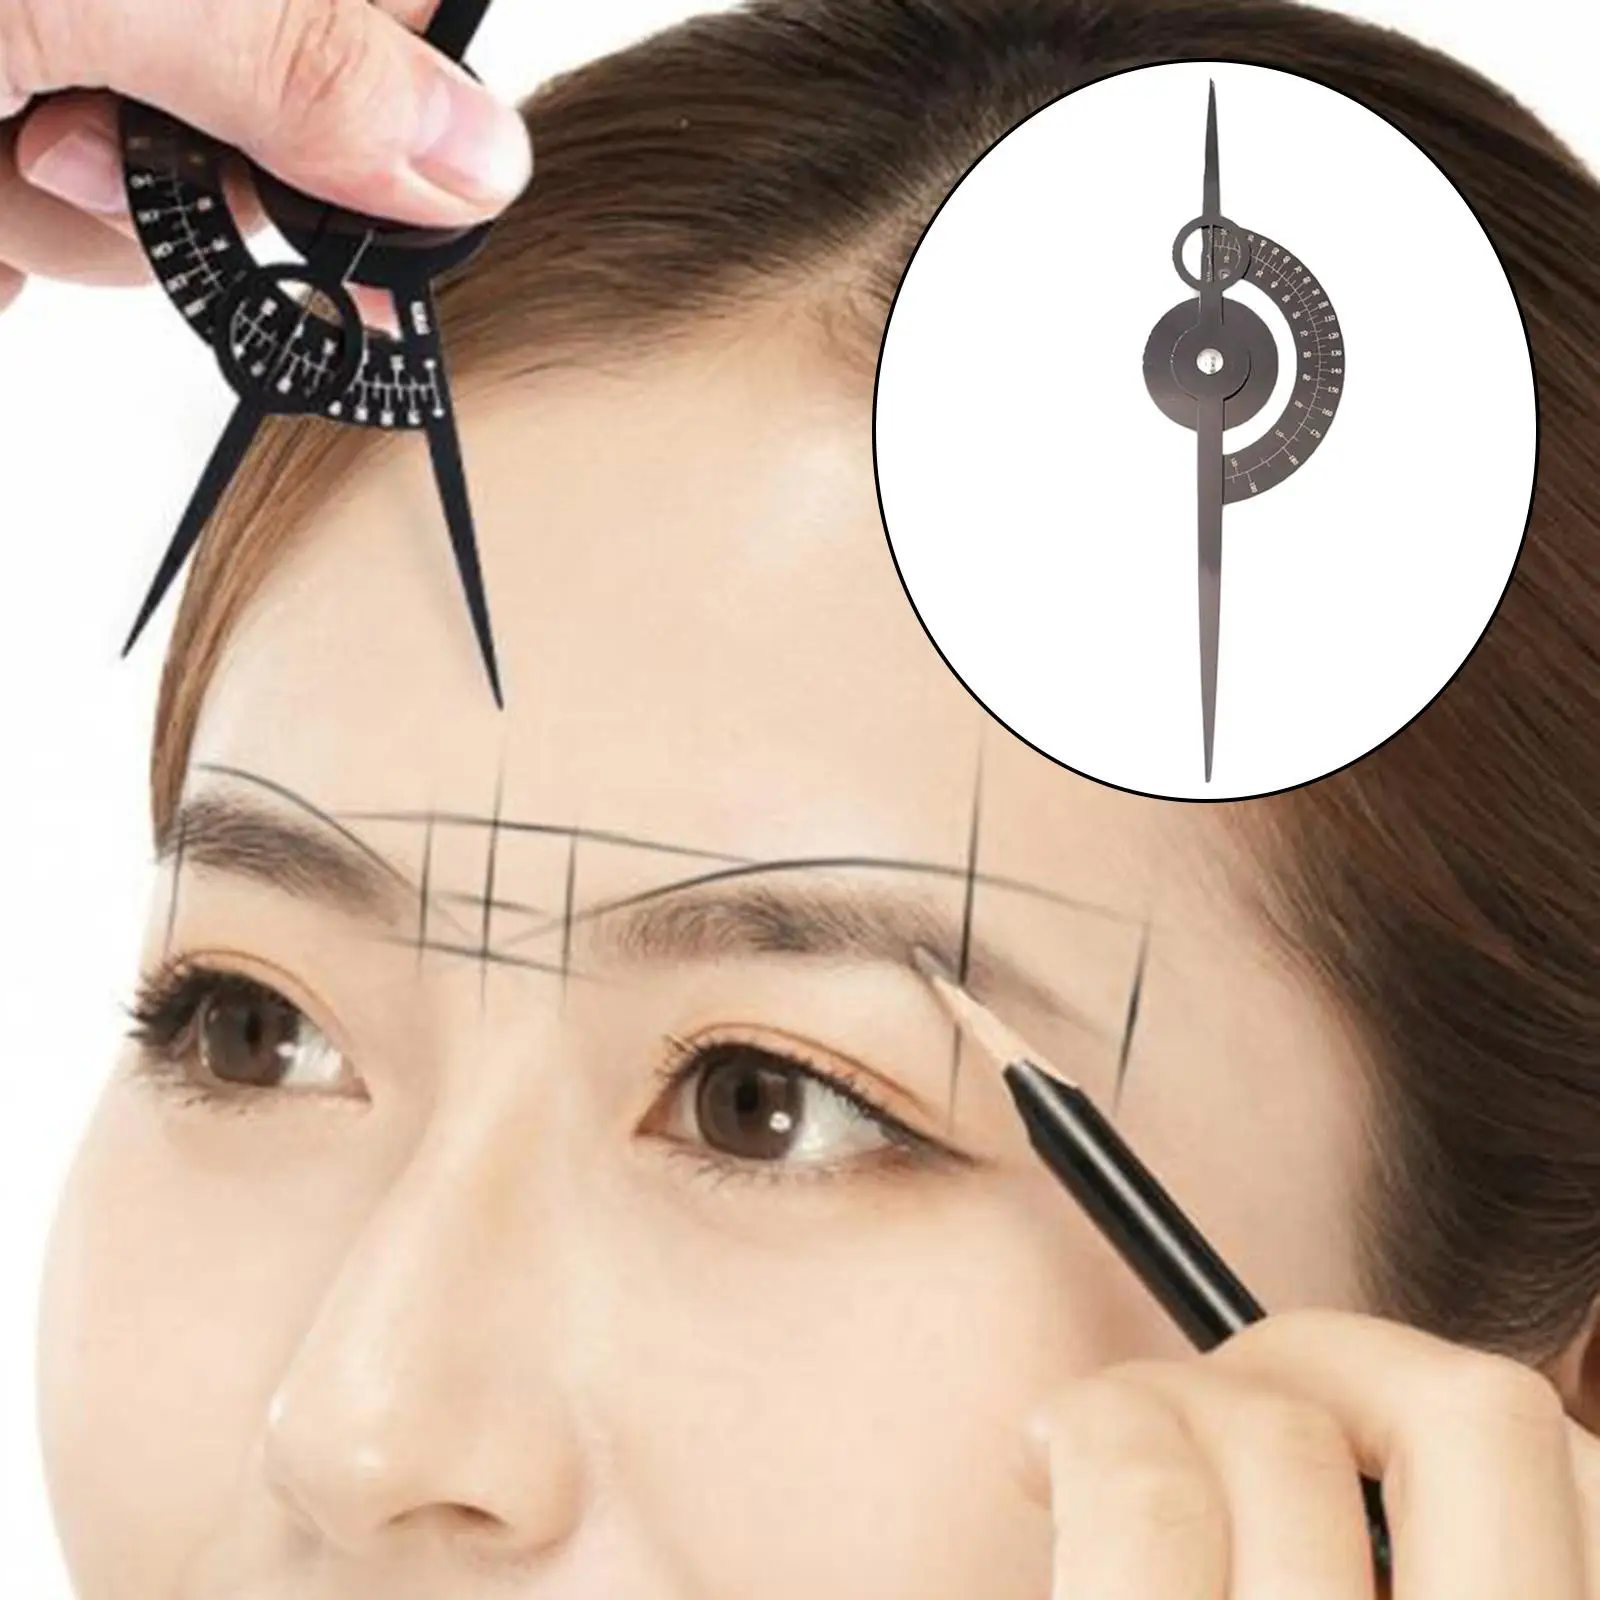  Ratio Caliper  Eyebrow Stainless Steel Ruler for Permanent Makeup Shaper DIY  Measure Tool